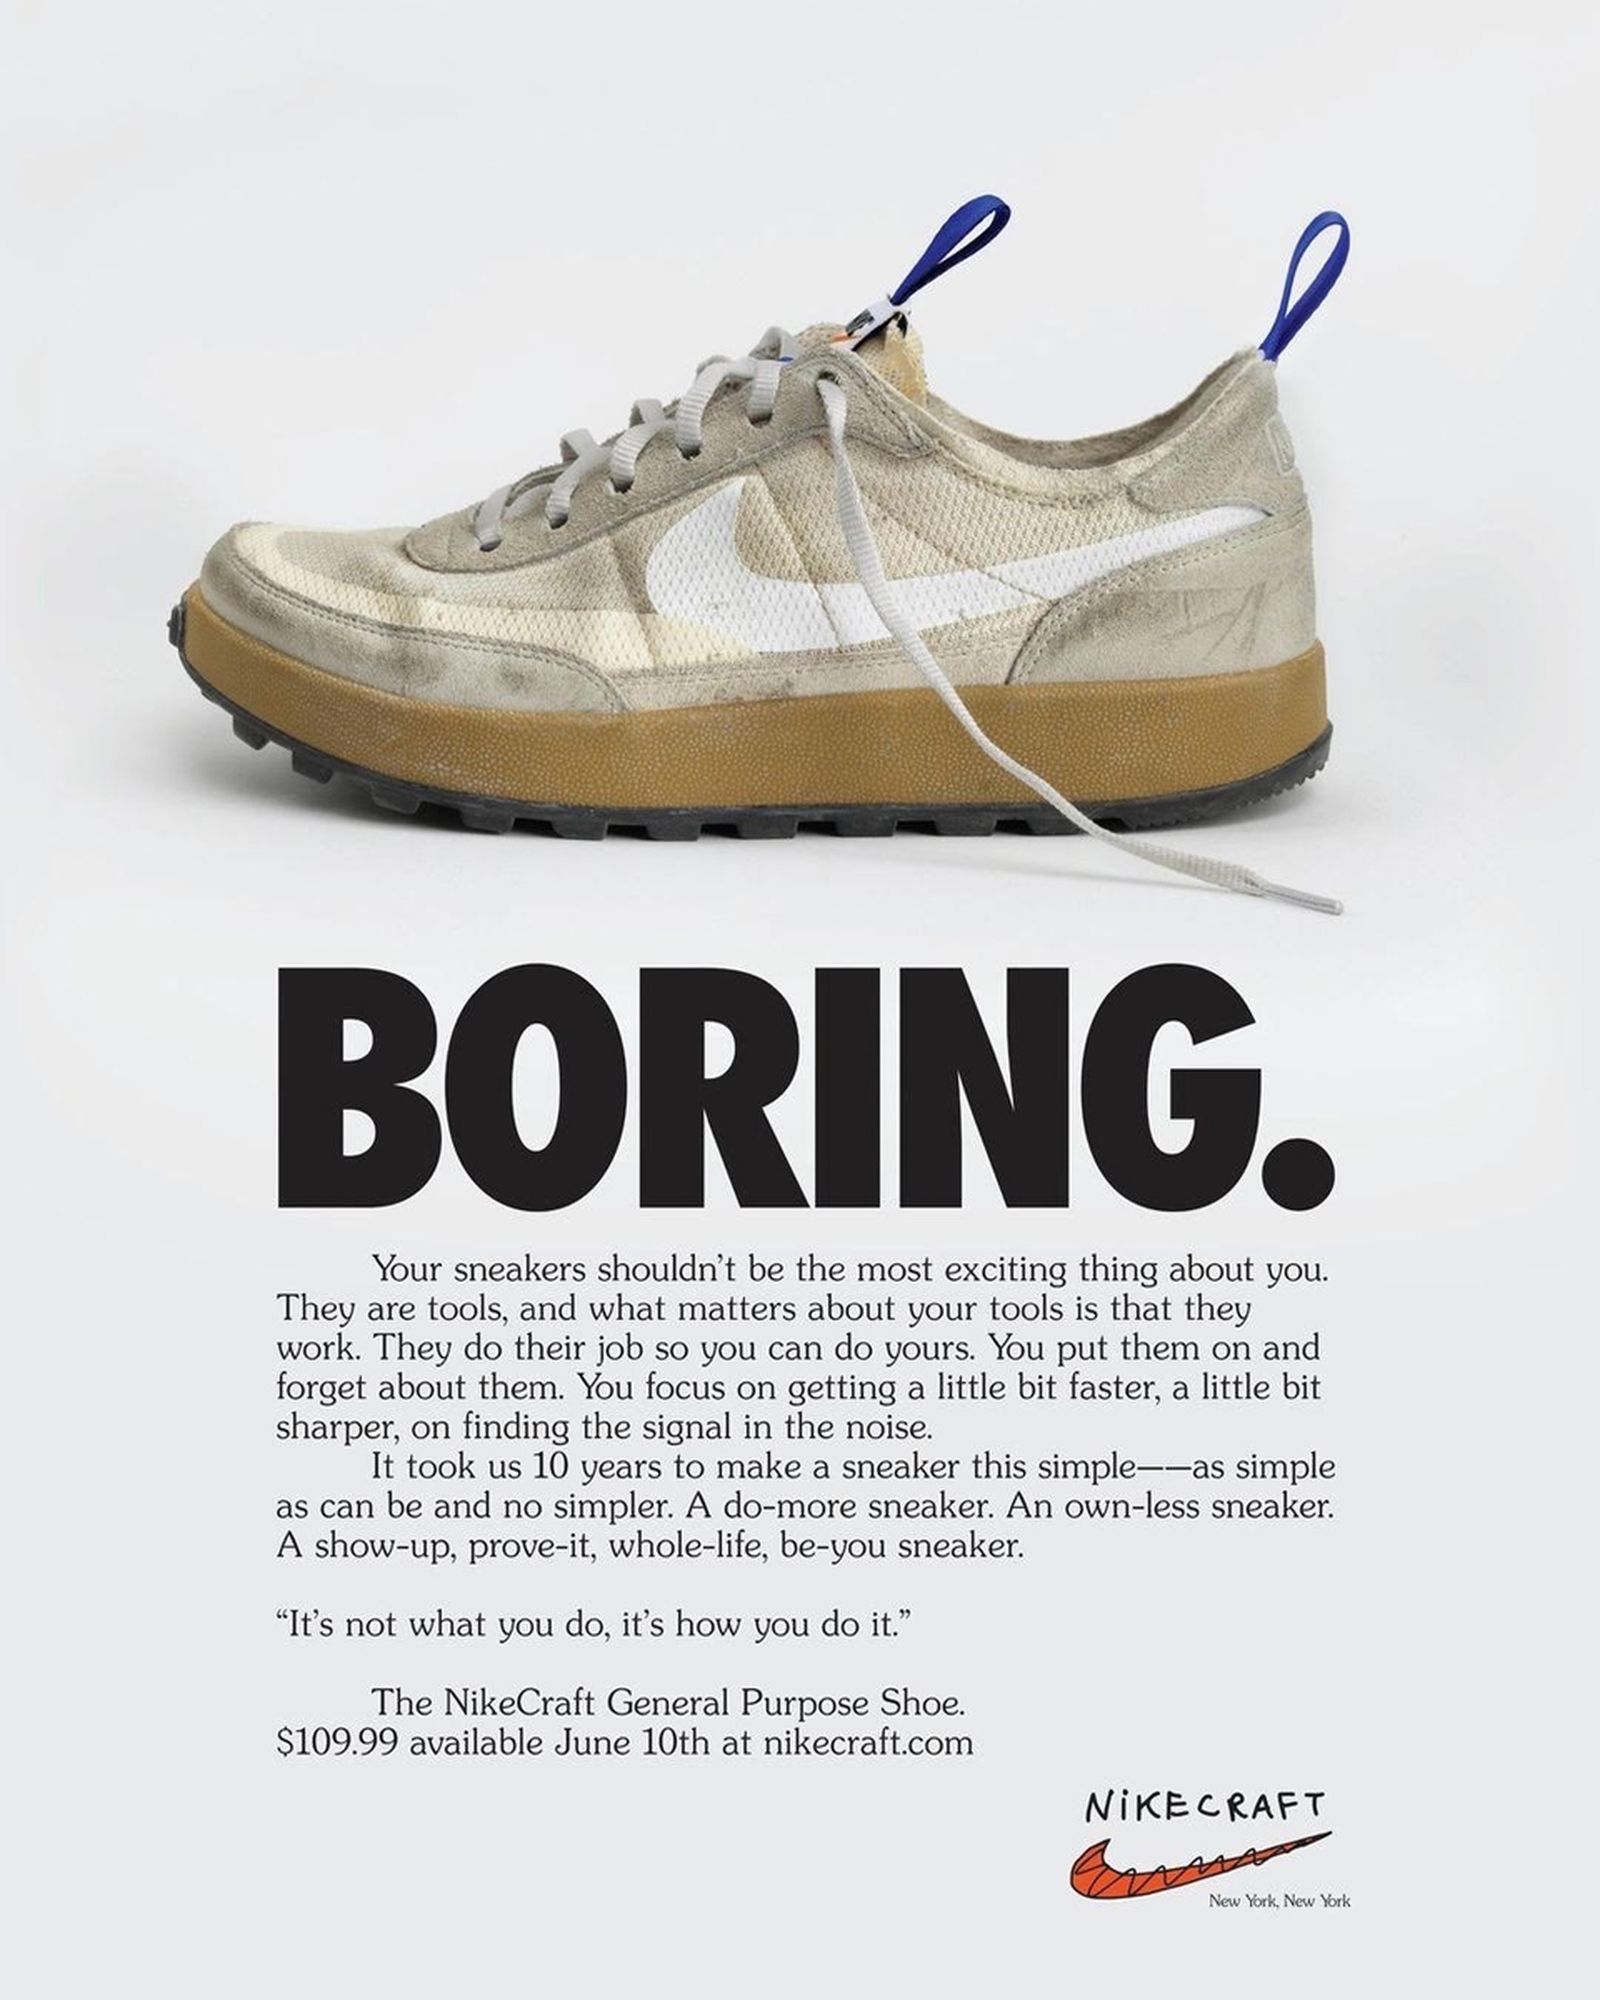 Tom Sachs's NikeCraft General Purpose Shoe Is Restocking